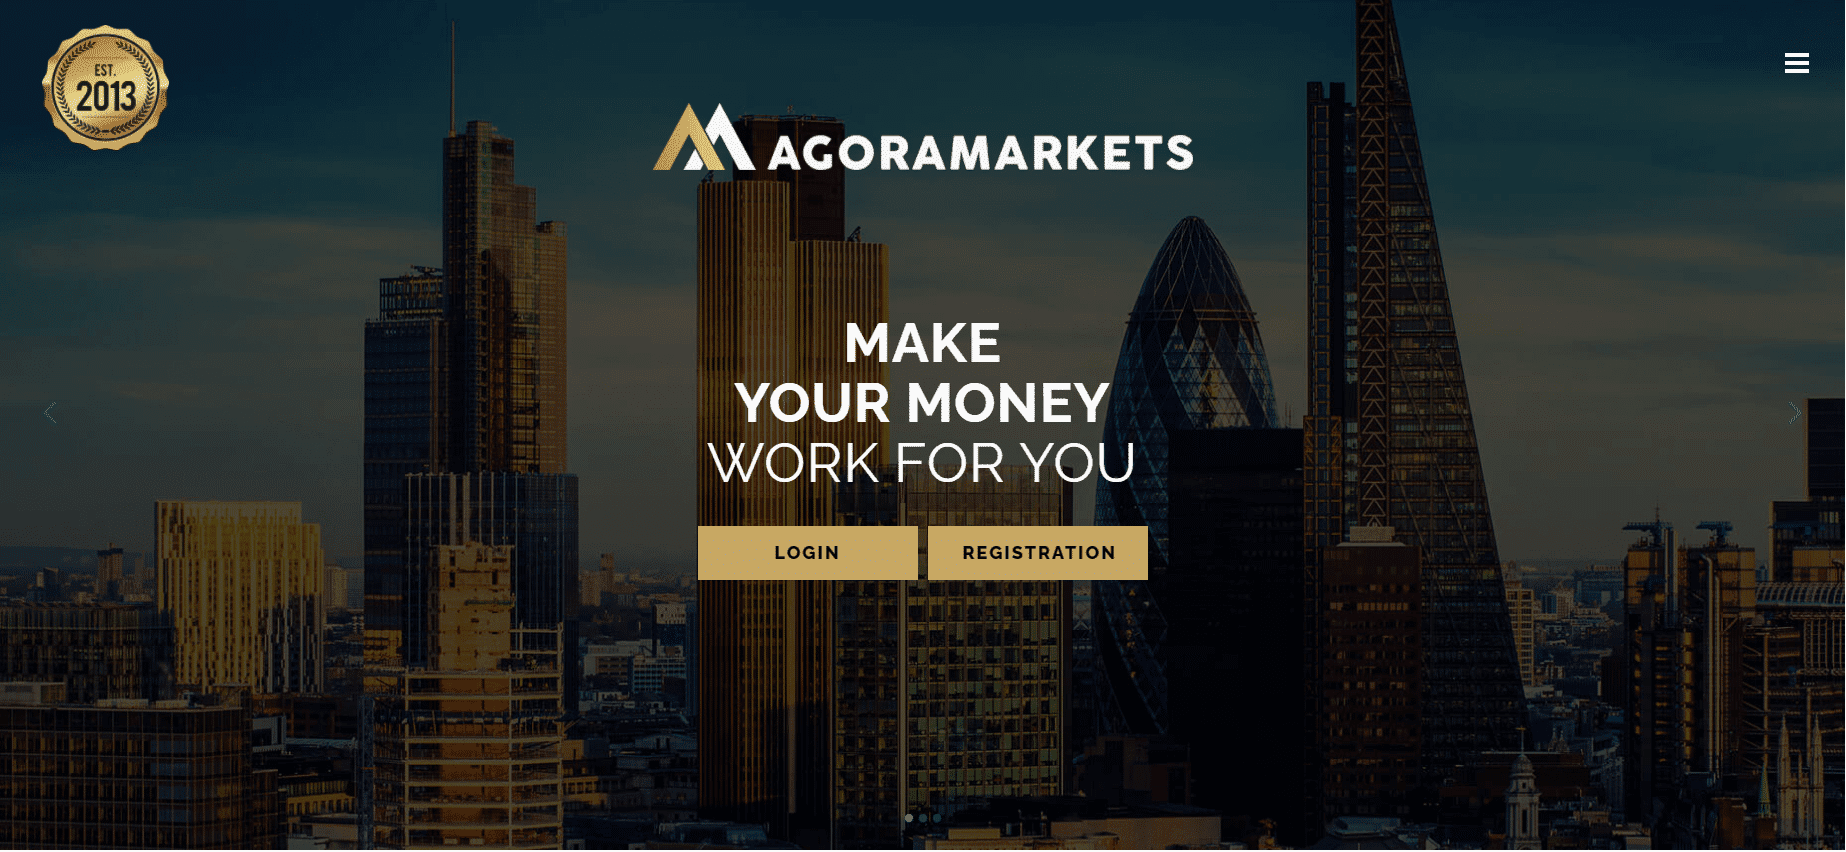 Is AgoraMarkets a scam?